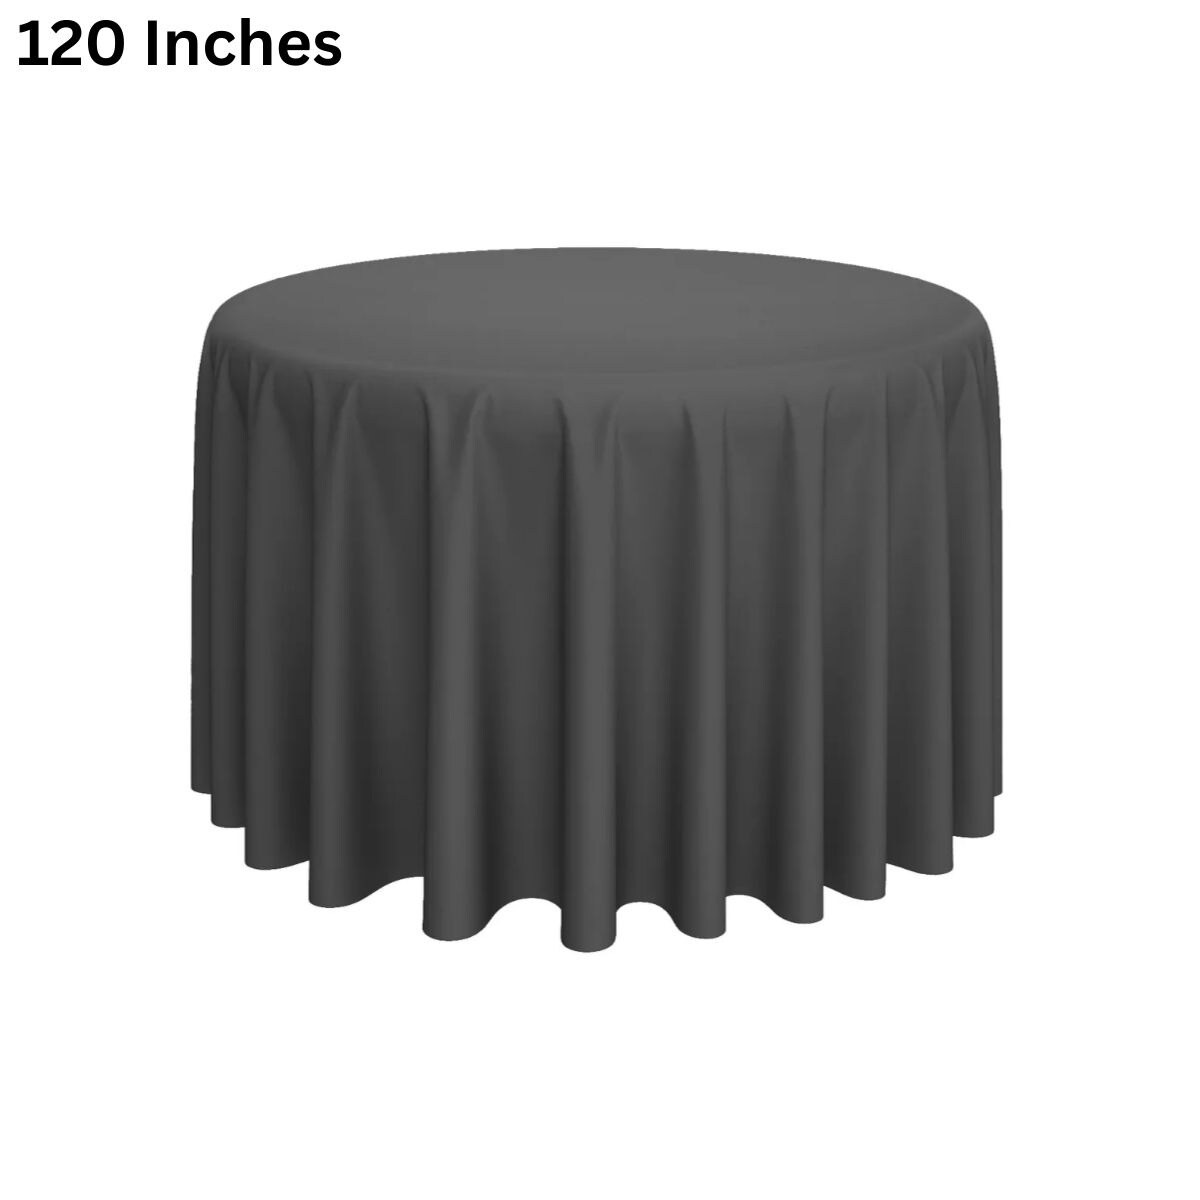 120 Inches Elegant Fabric Tablecloth